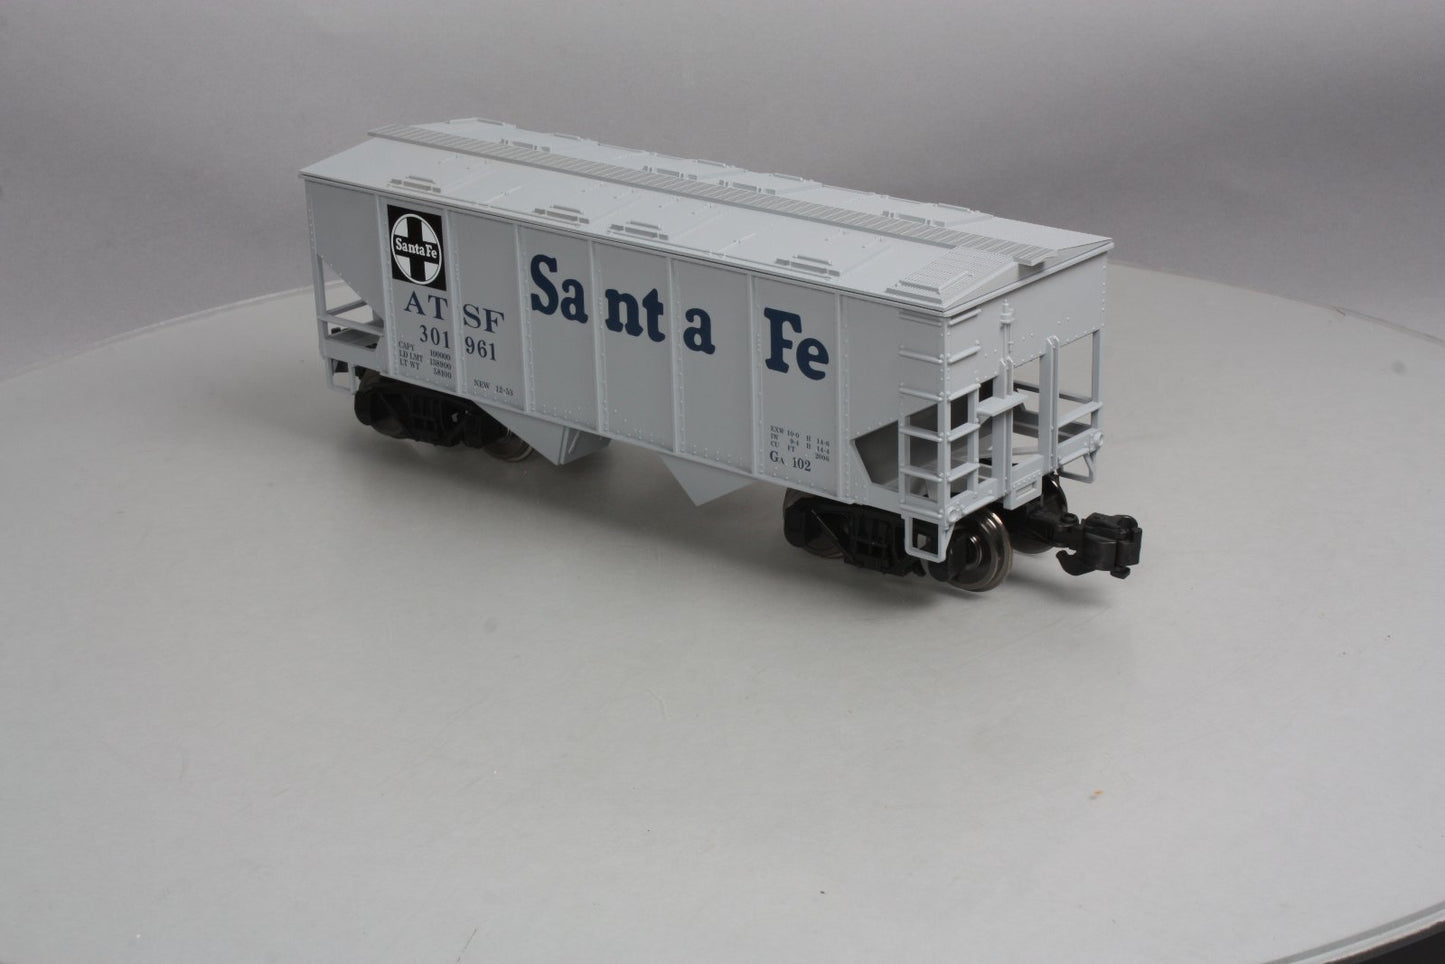 Piko 38835 G Scale Santa Fe Covered Hopper Car (Metal Wheels)